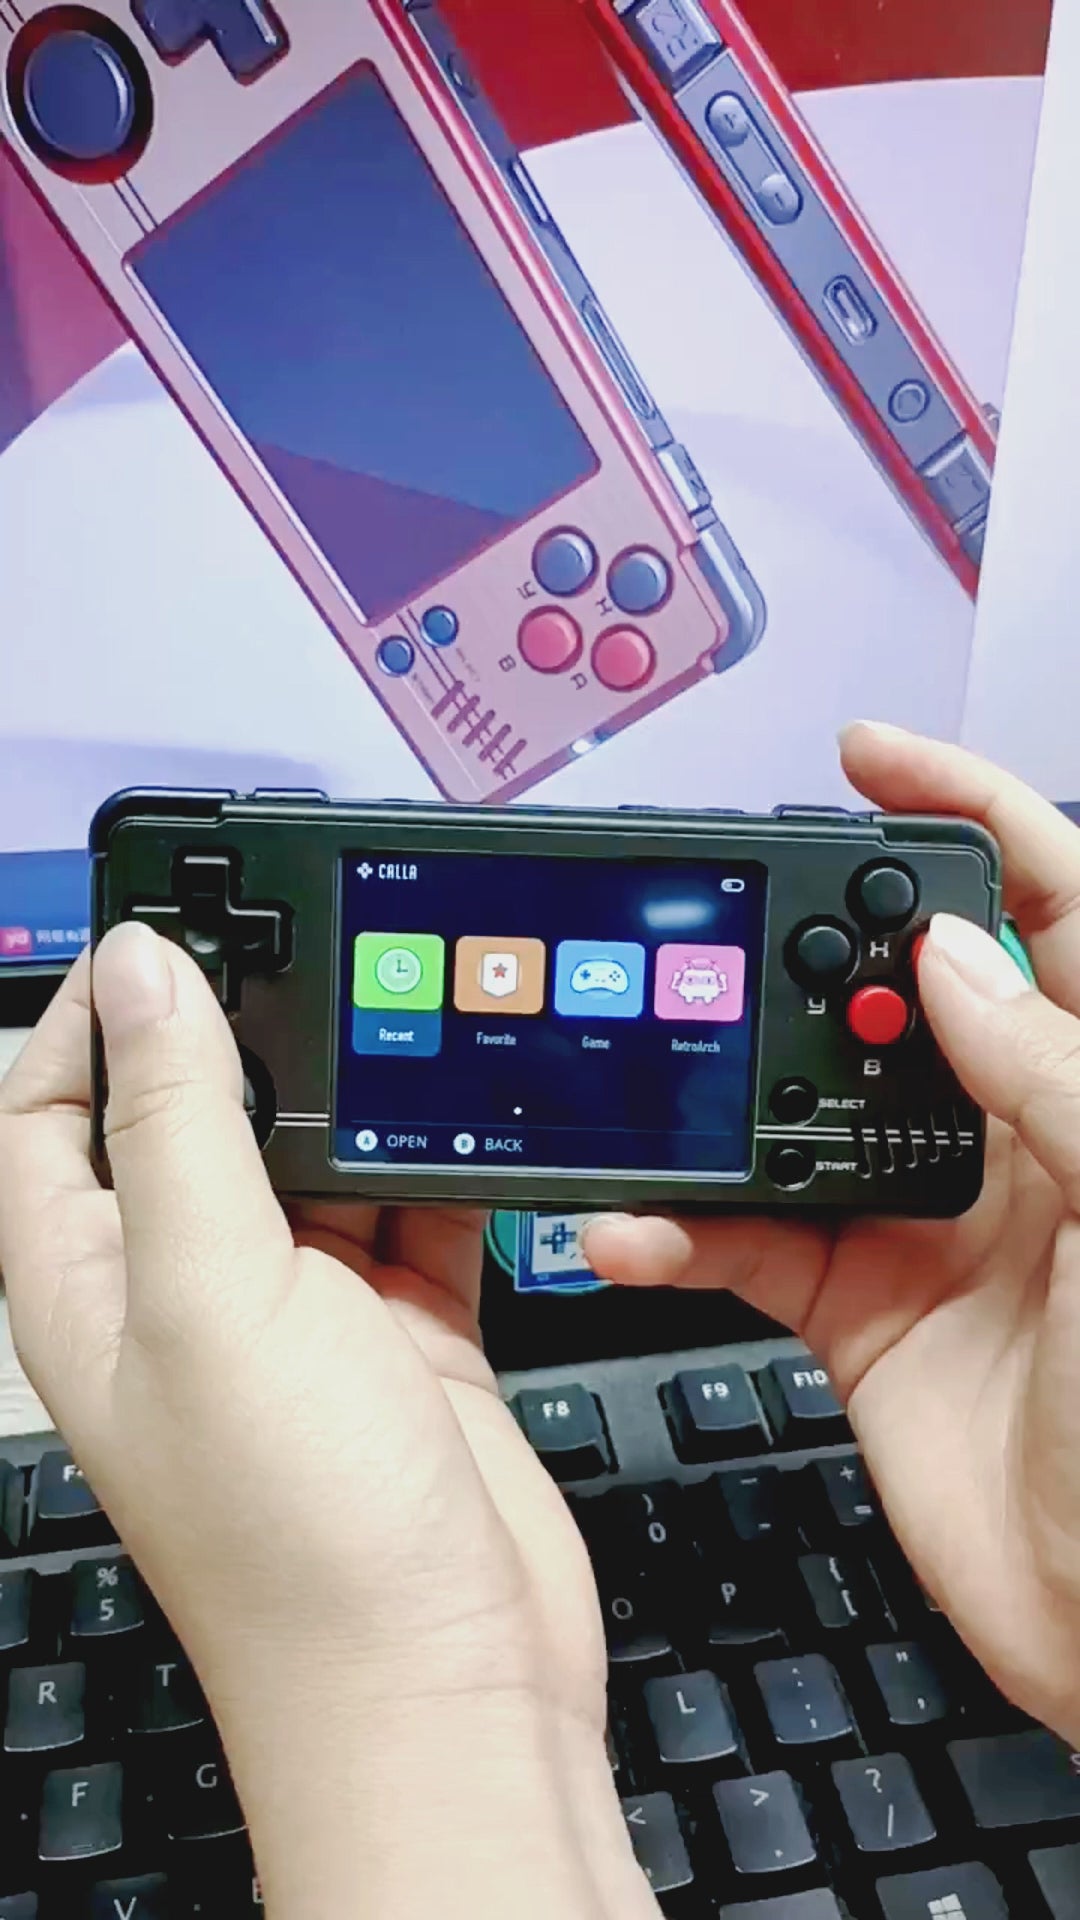 MIYOO A30 Retro Handheld Game Console